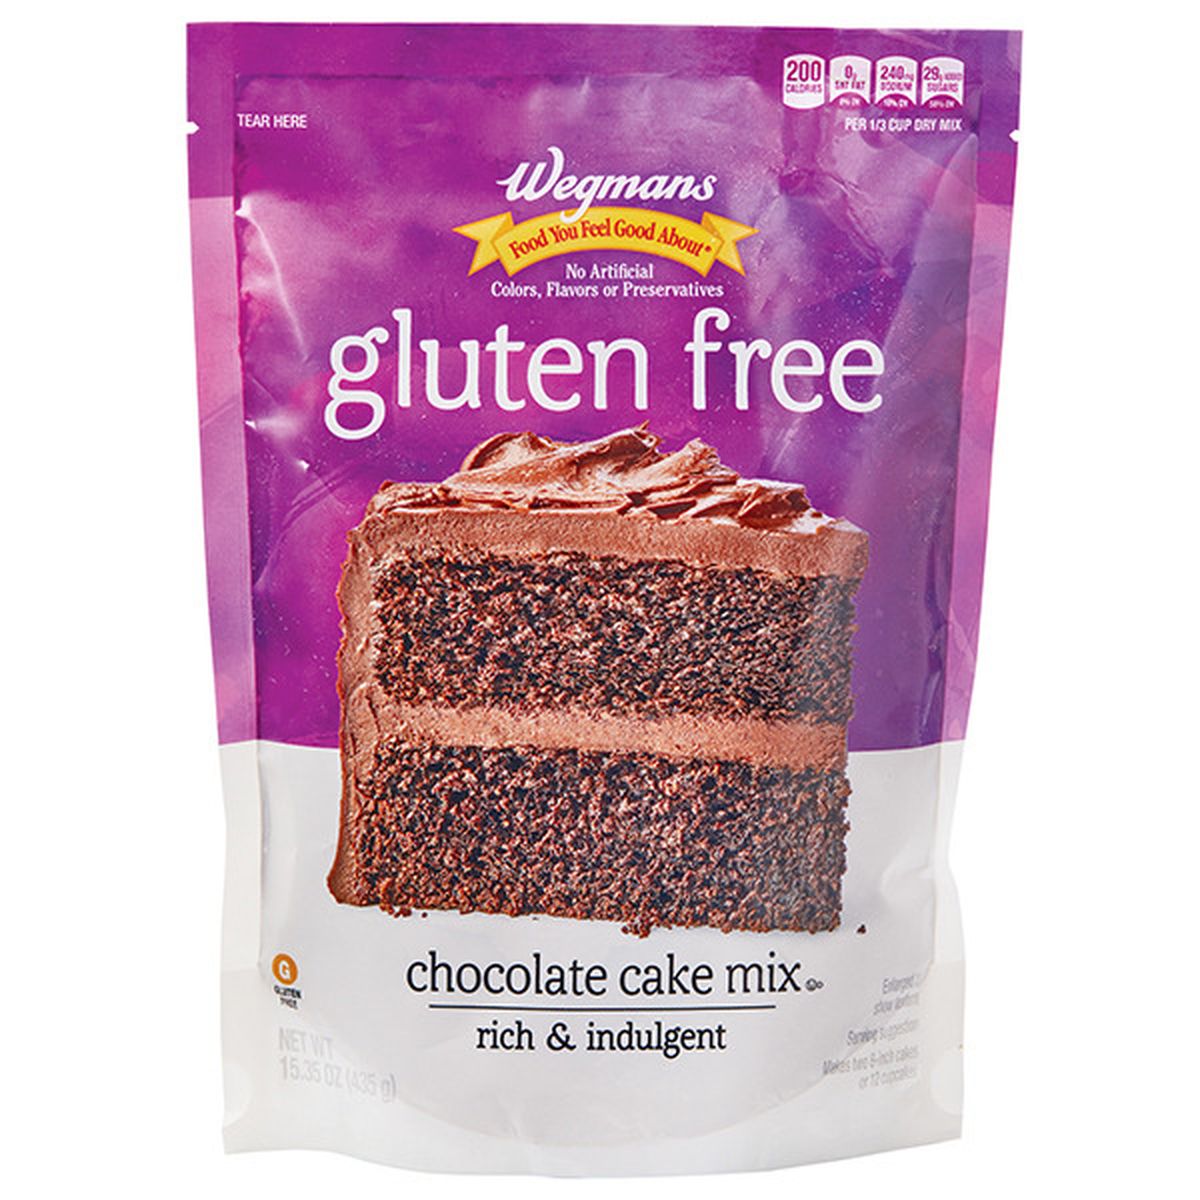 Calories in Wegmans Gluten Free Chocolate Cake Mix